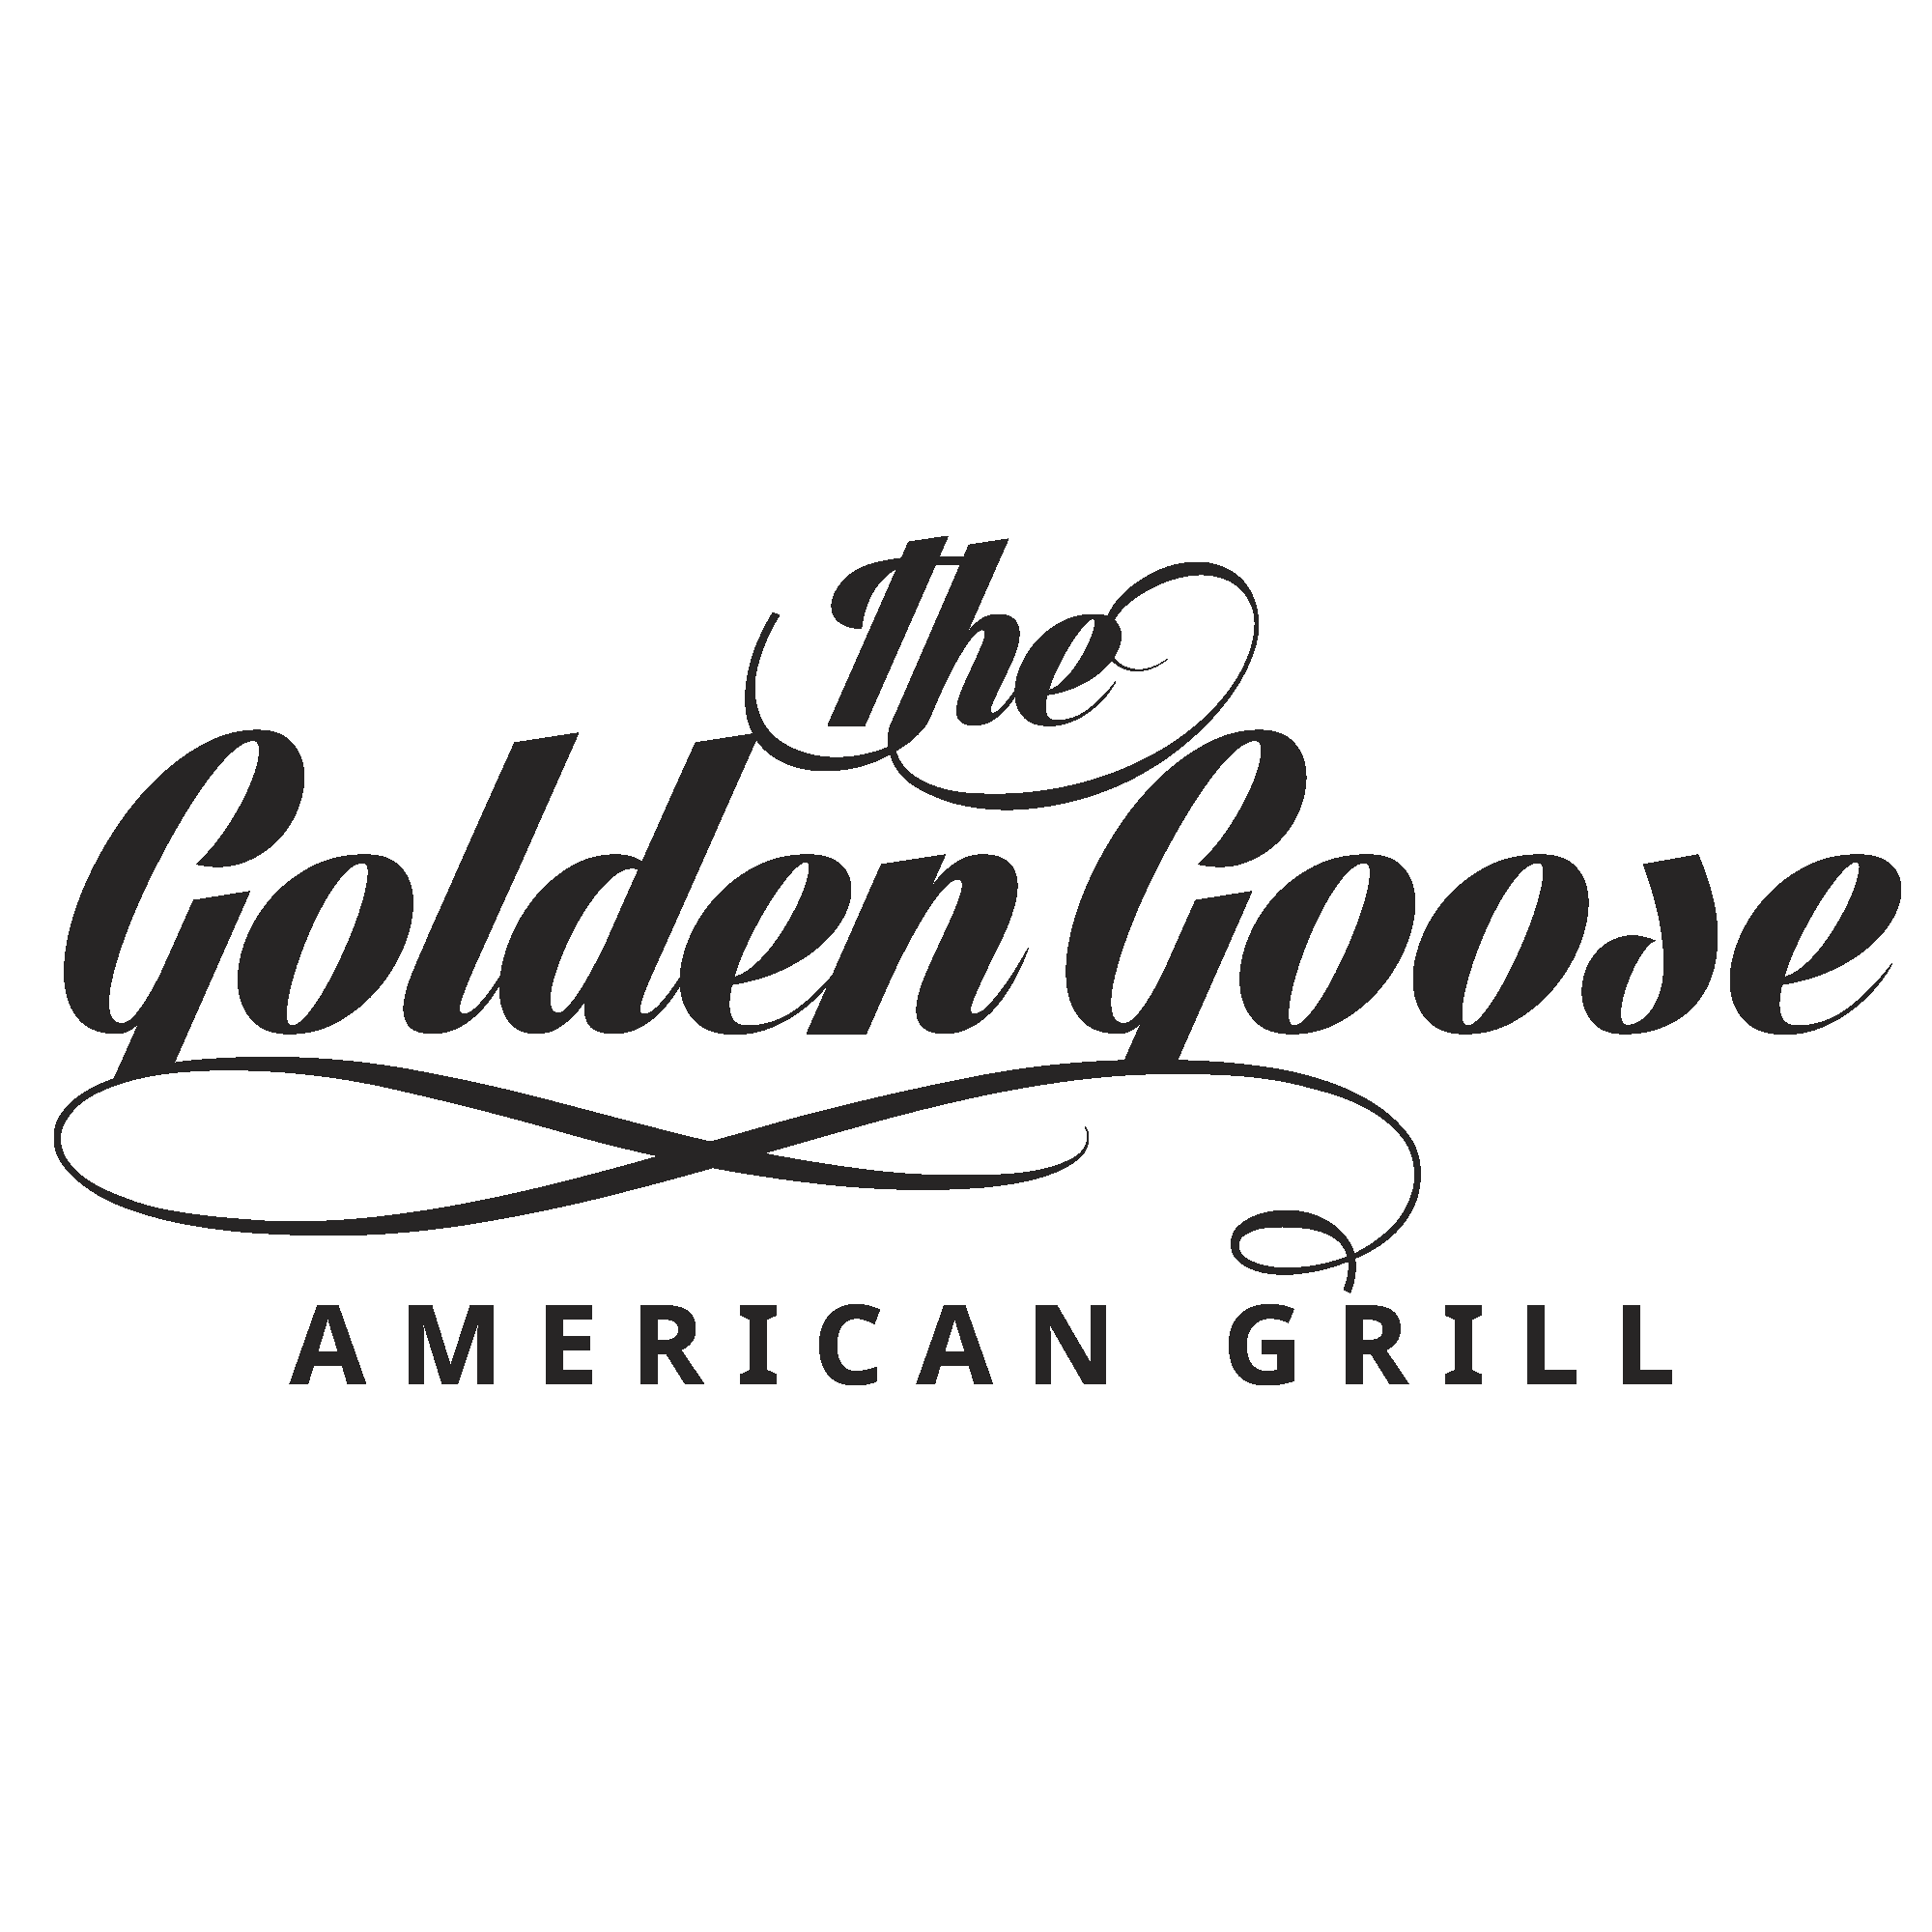 Golden Goose Grill